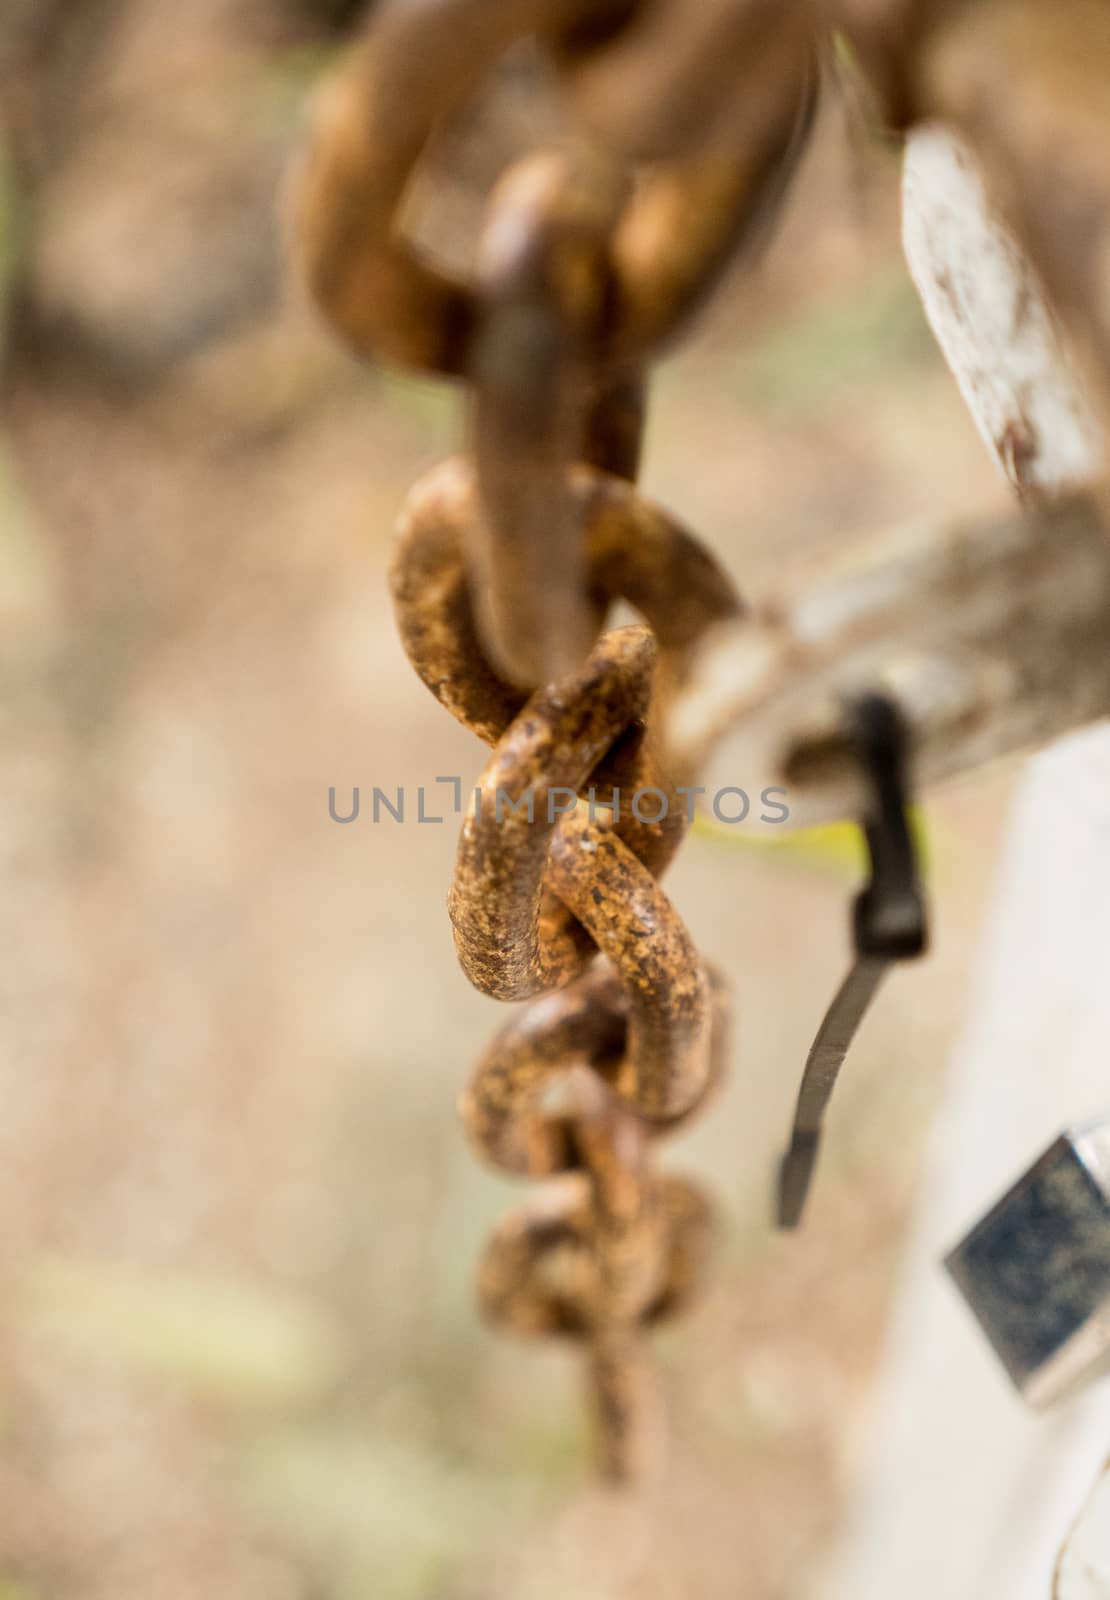 Rusty Chain and metal lock by azamshah72